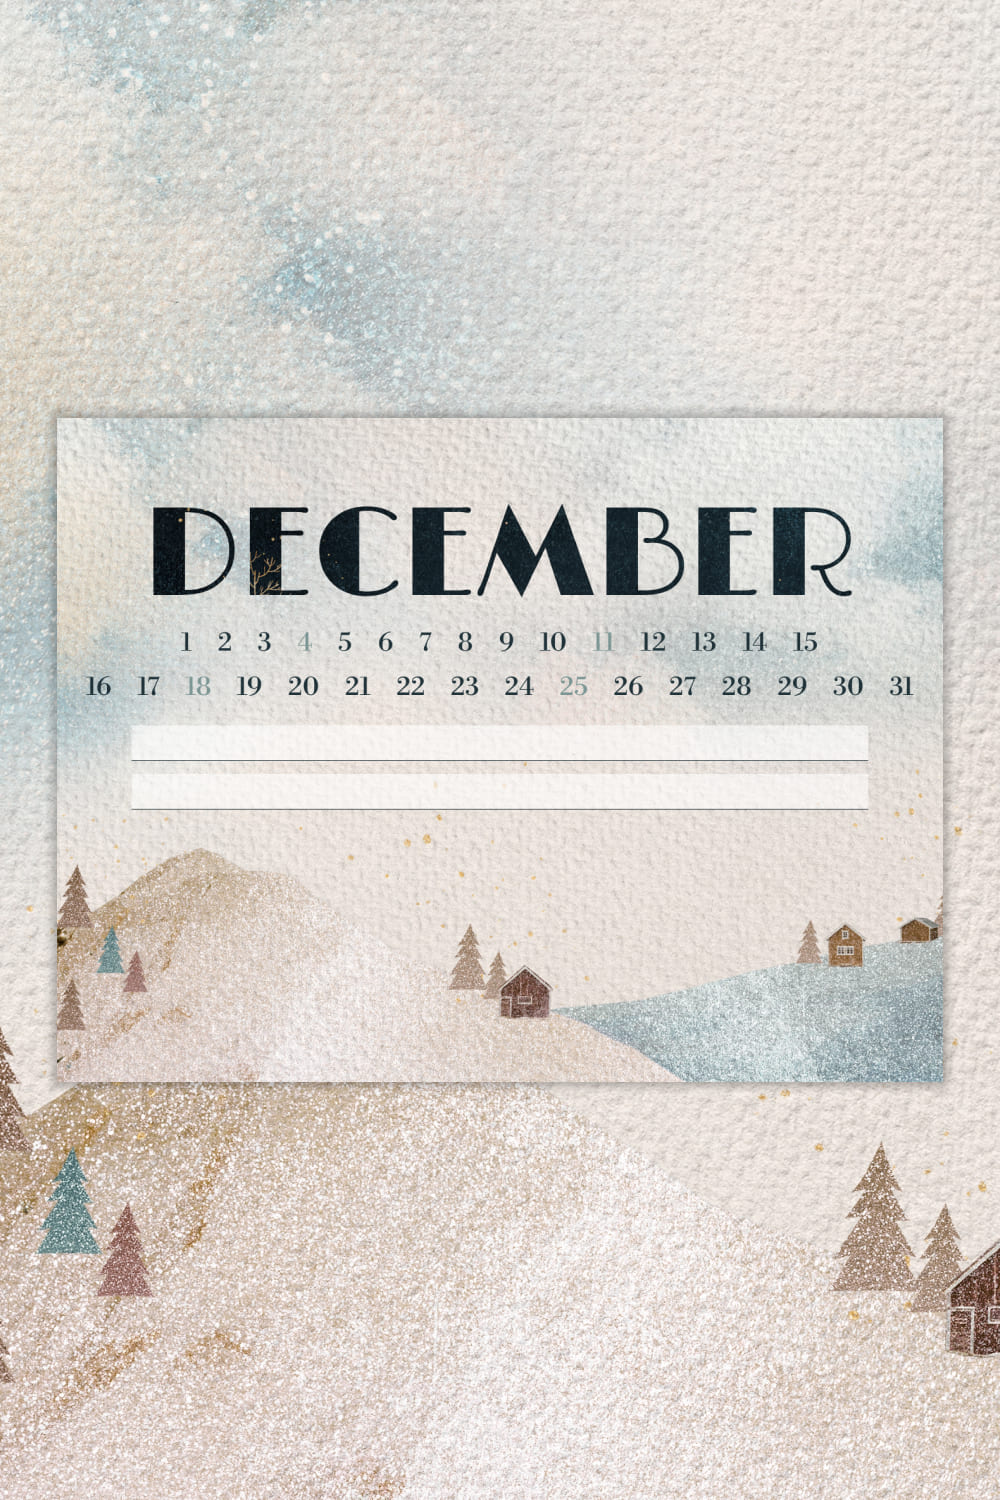 Free Rustic December Calendar - Pinterest.